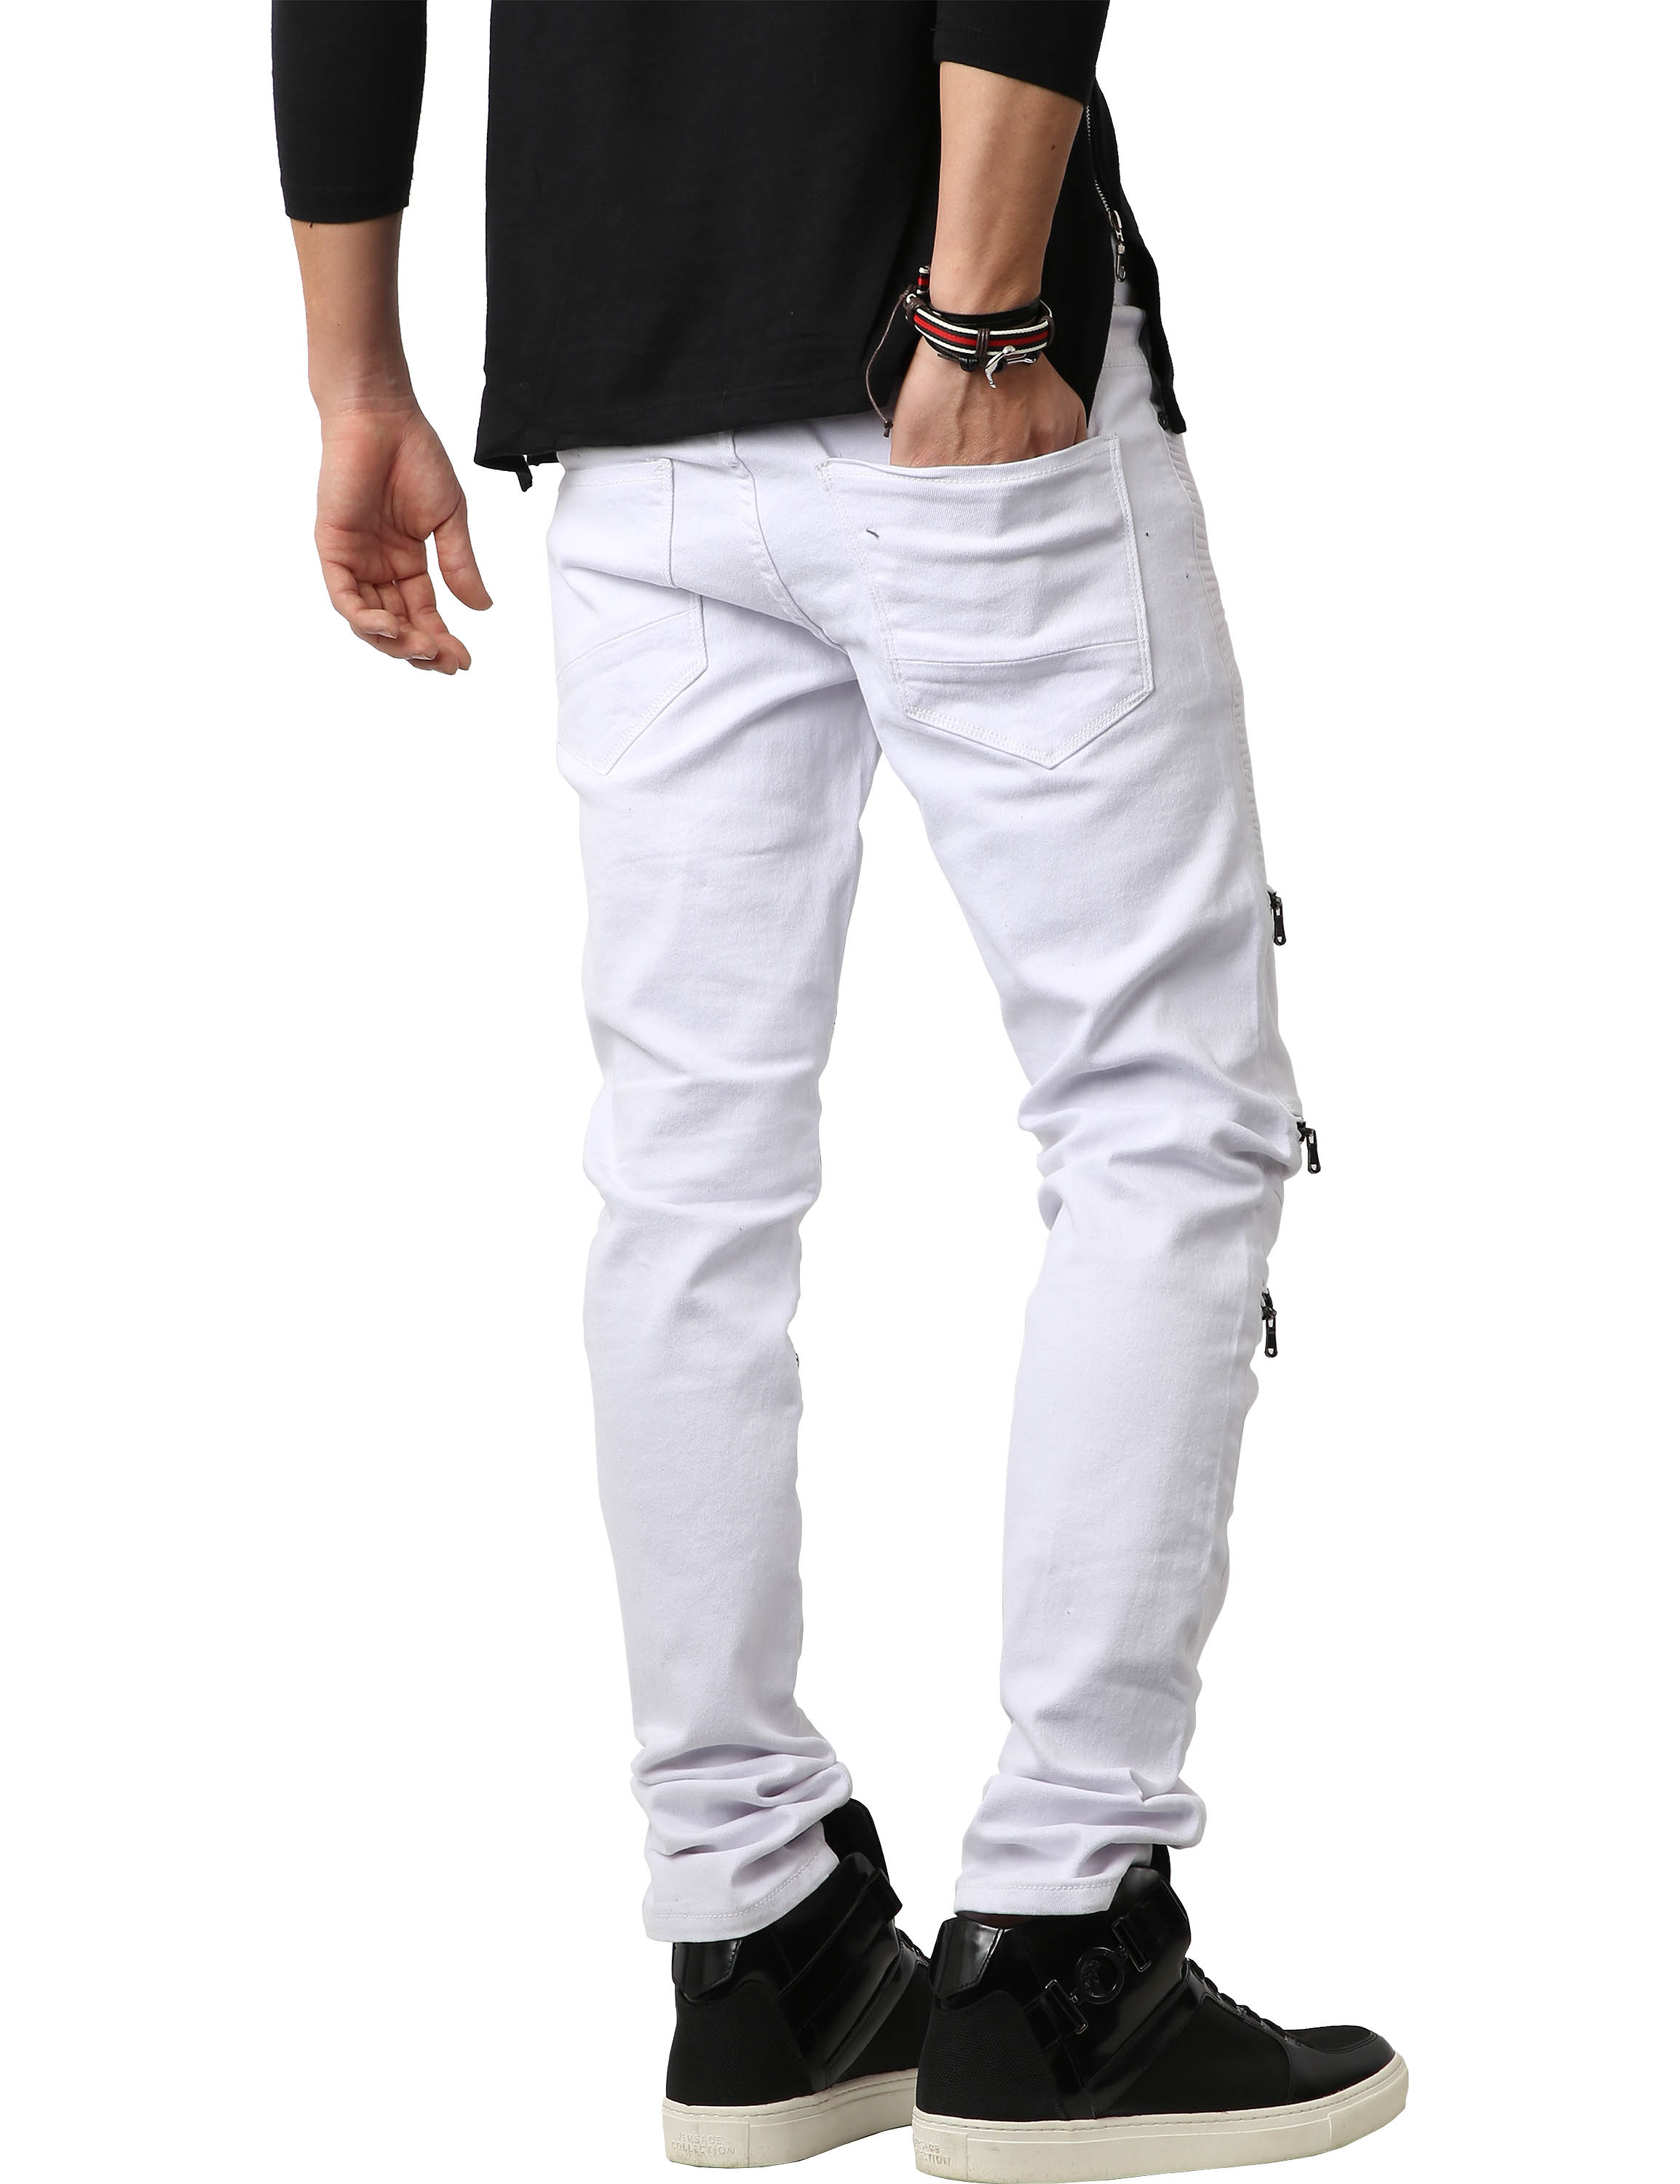 Ma Croix Mens Biker Jeans Distressed Ripped Zipper Straight Slim Fit Stretch Denim Pants - image 4 of 6